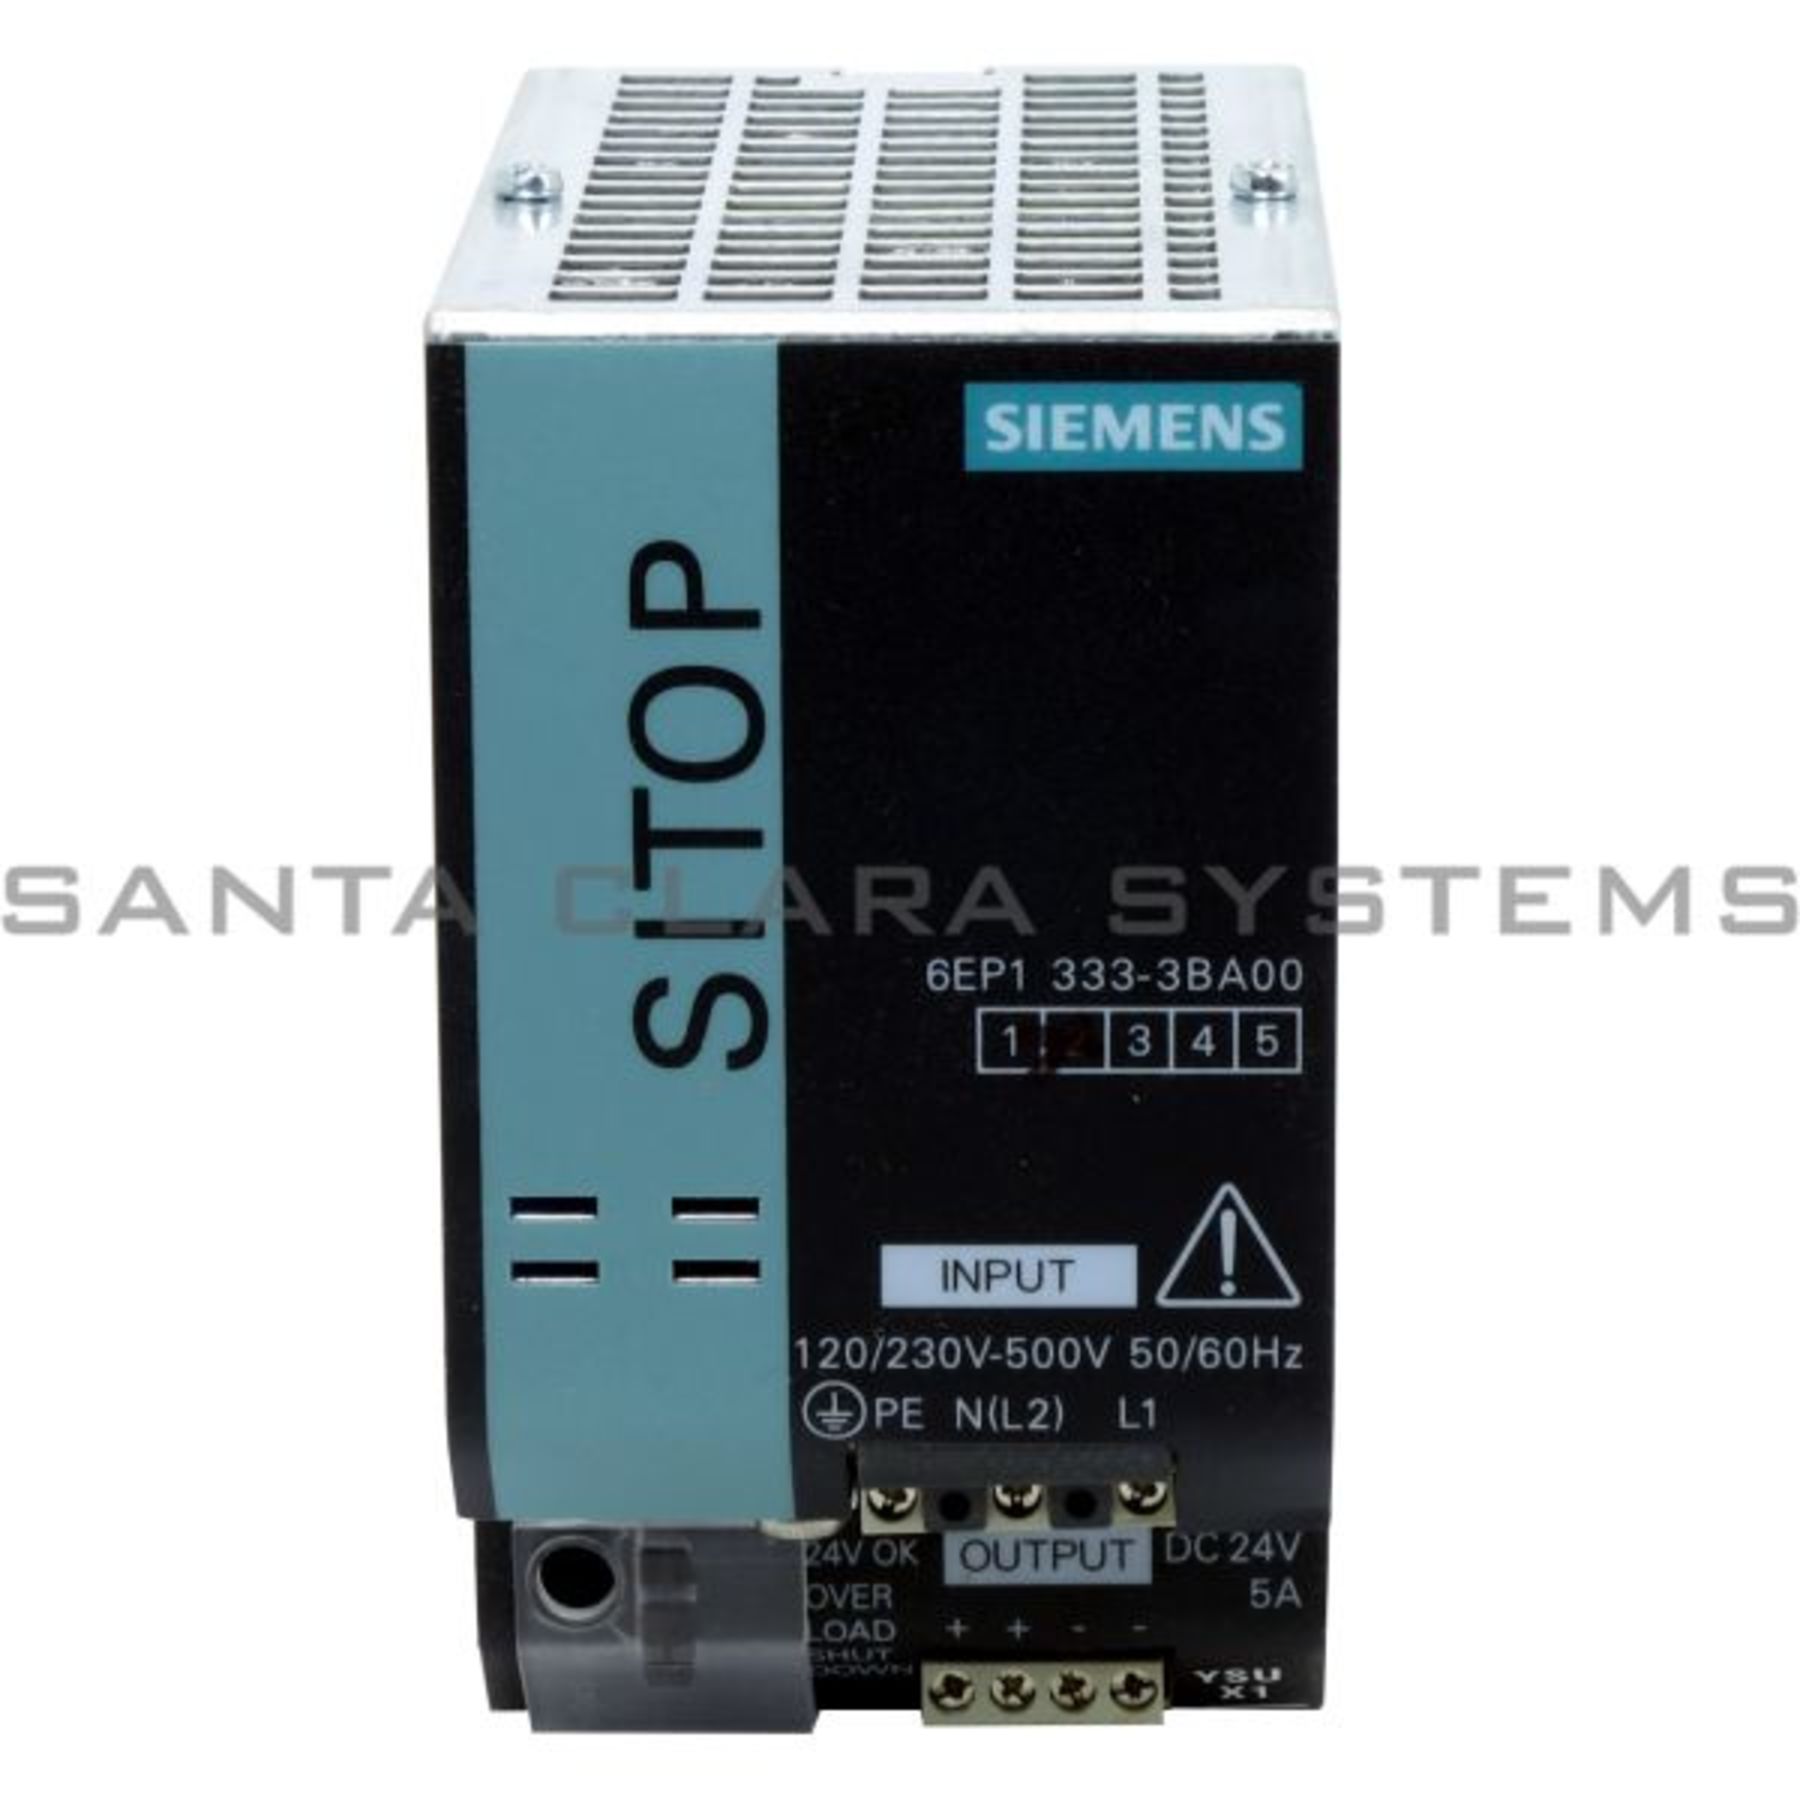 6EP1 333-3BA00 Sitop modular 5A 1/2 ph Details about   Siemens 6EP1333-3BA00 